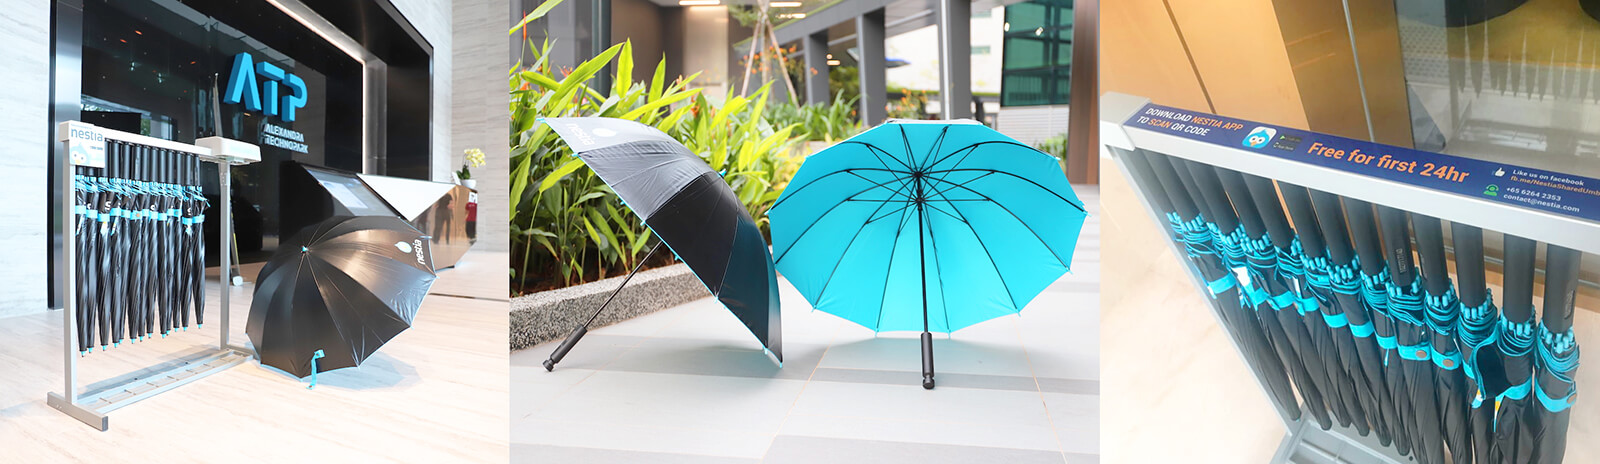 Nestia - introduction to shared umbrella ads 2